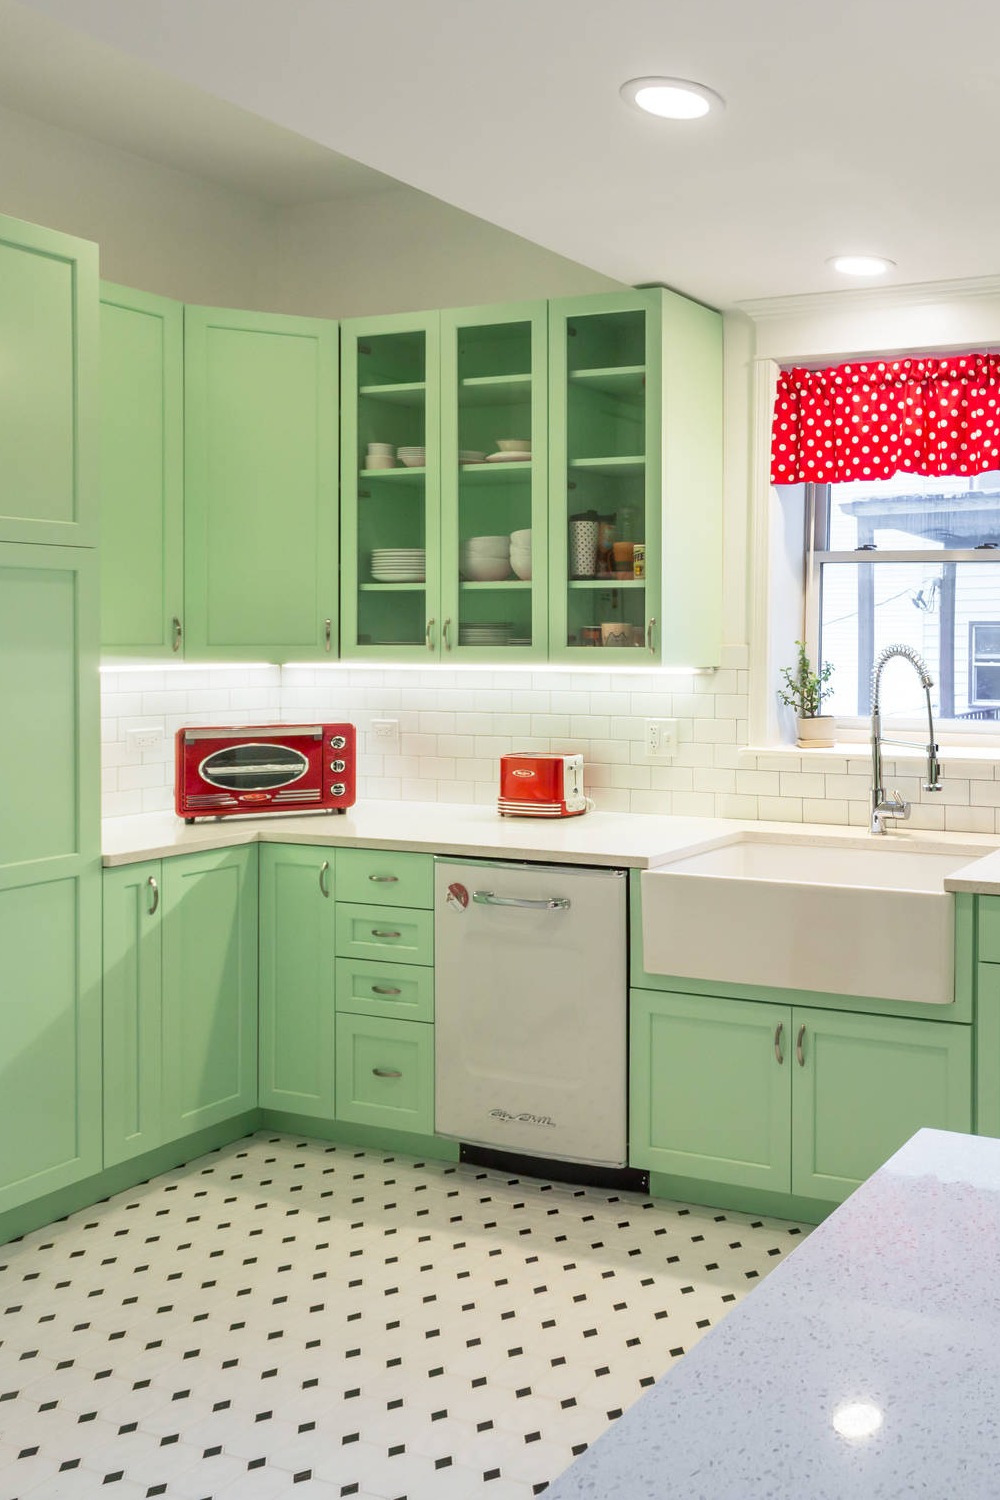 Green Kitchen Cabinets Retro Kitchen Cabinetry Light Farmhouse Sink Quartz Countertop Subway Tiles